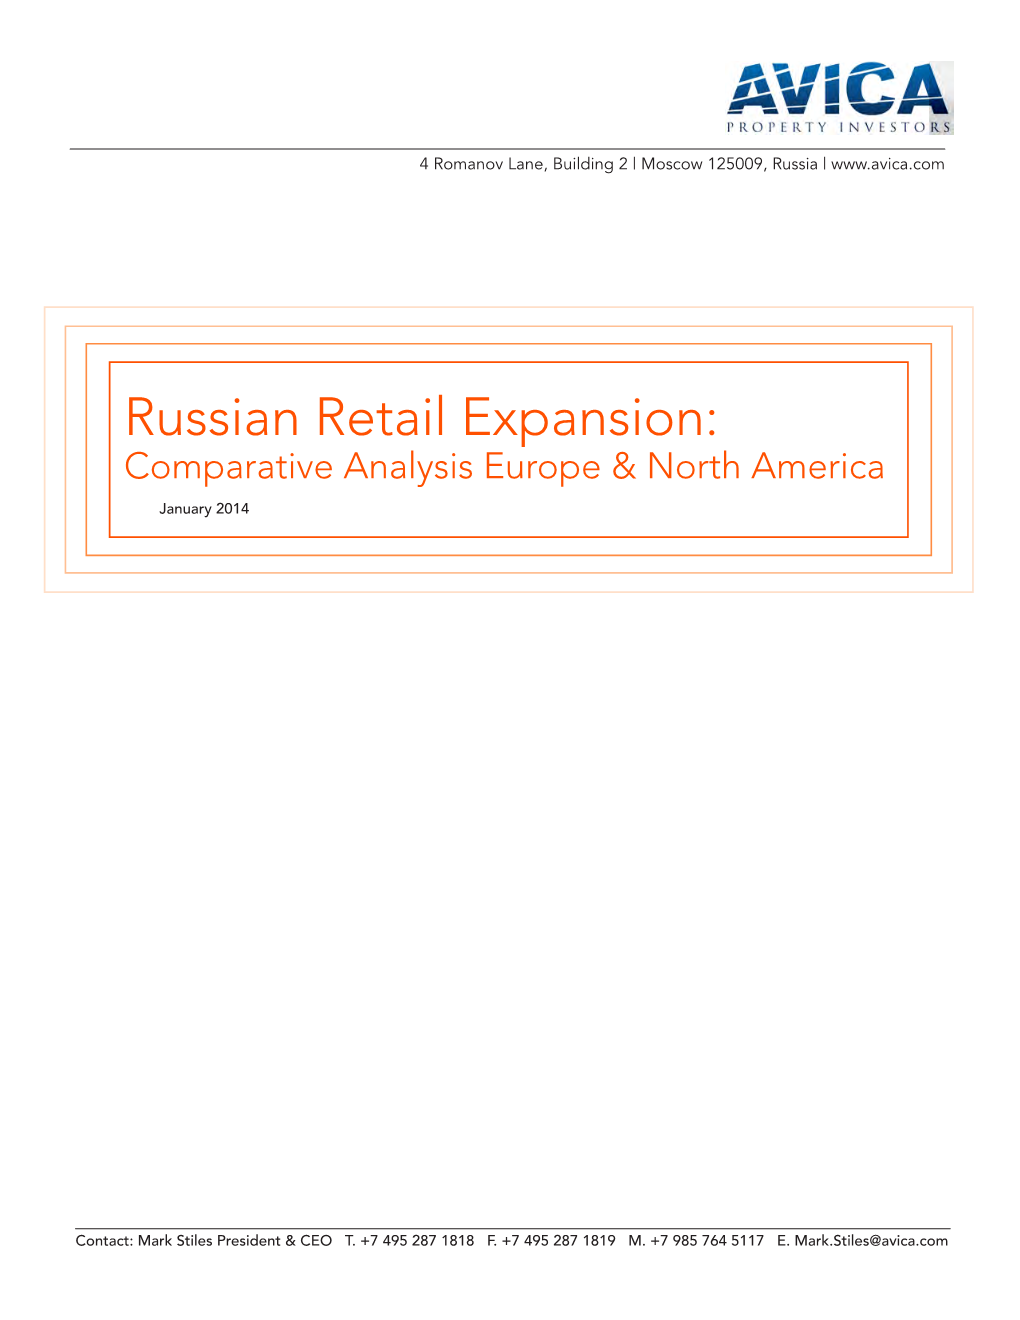 Russia Retail Report